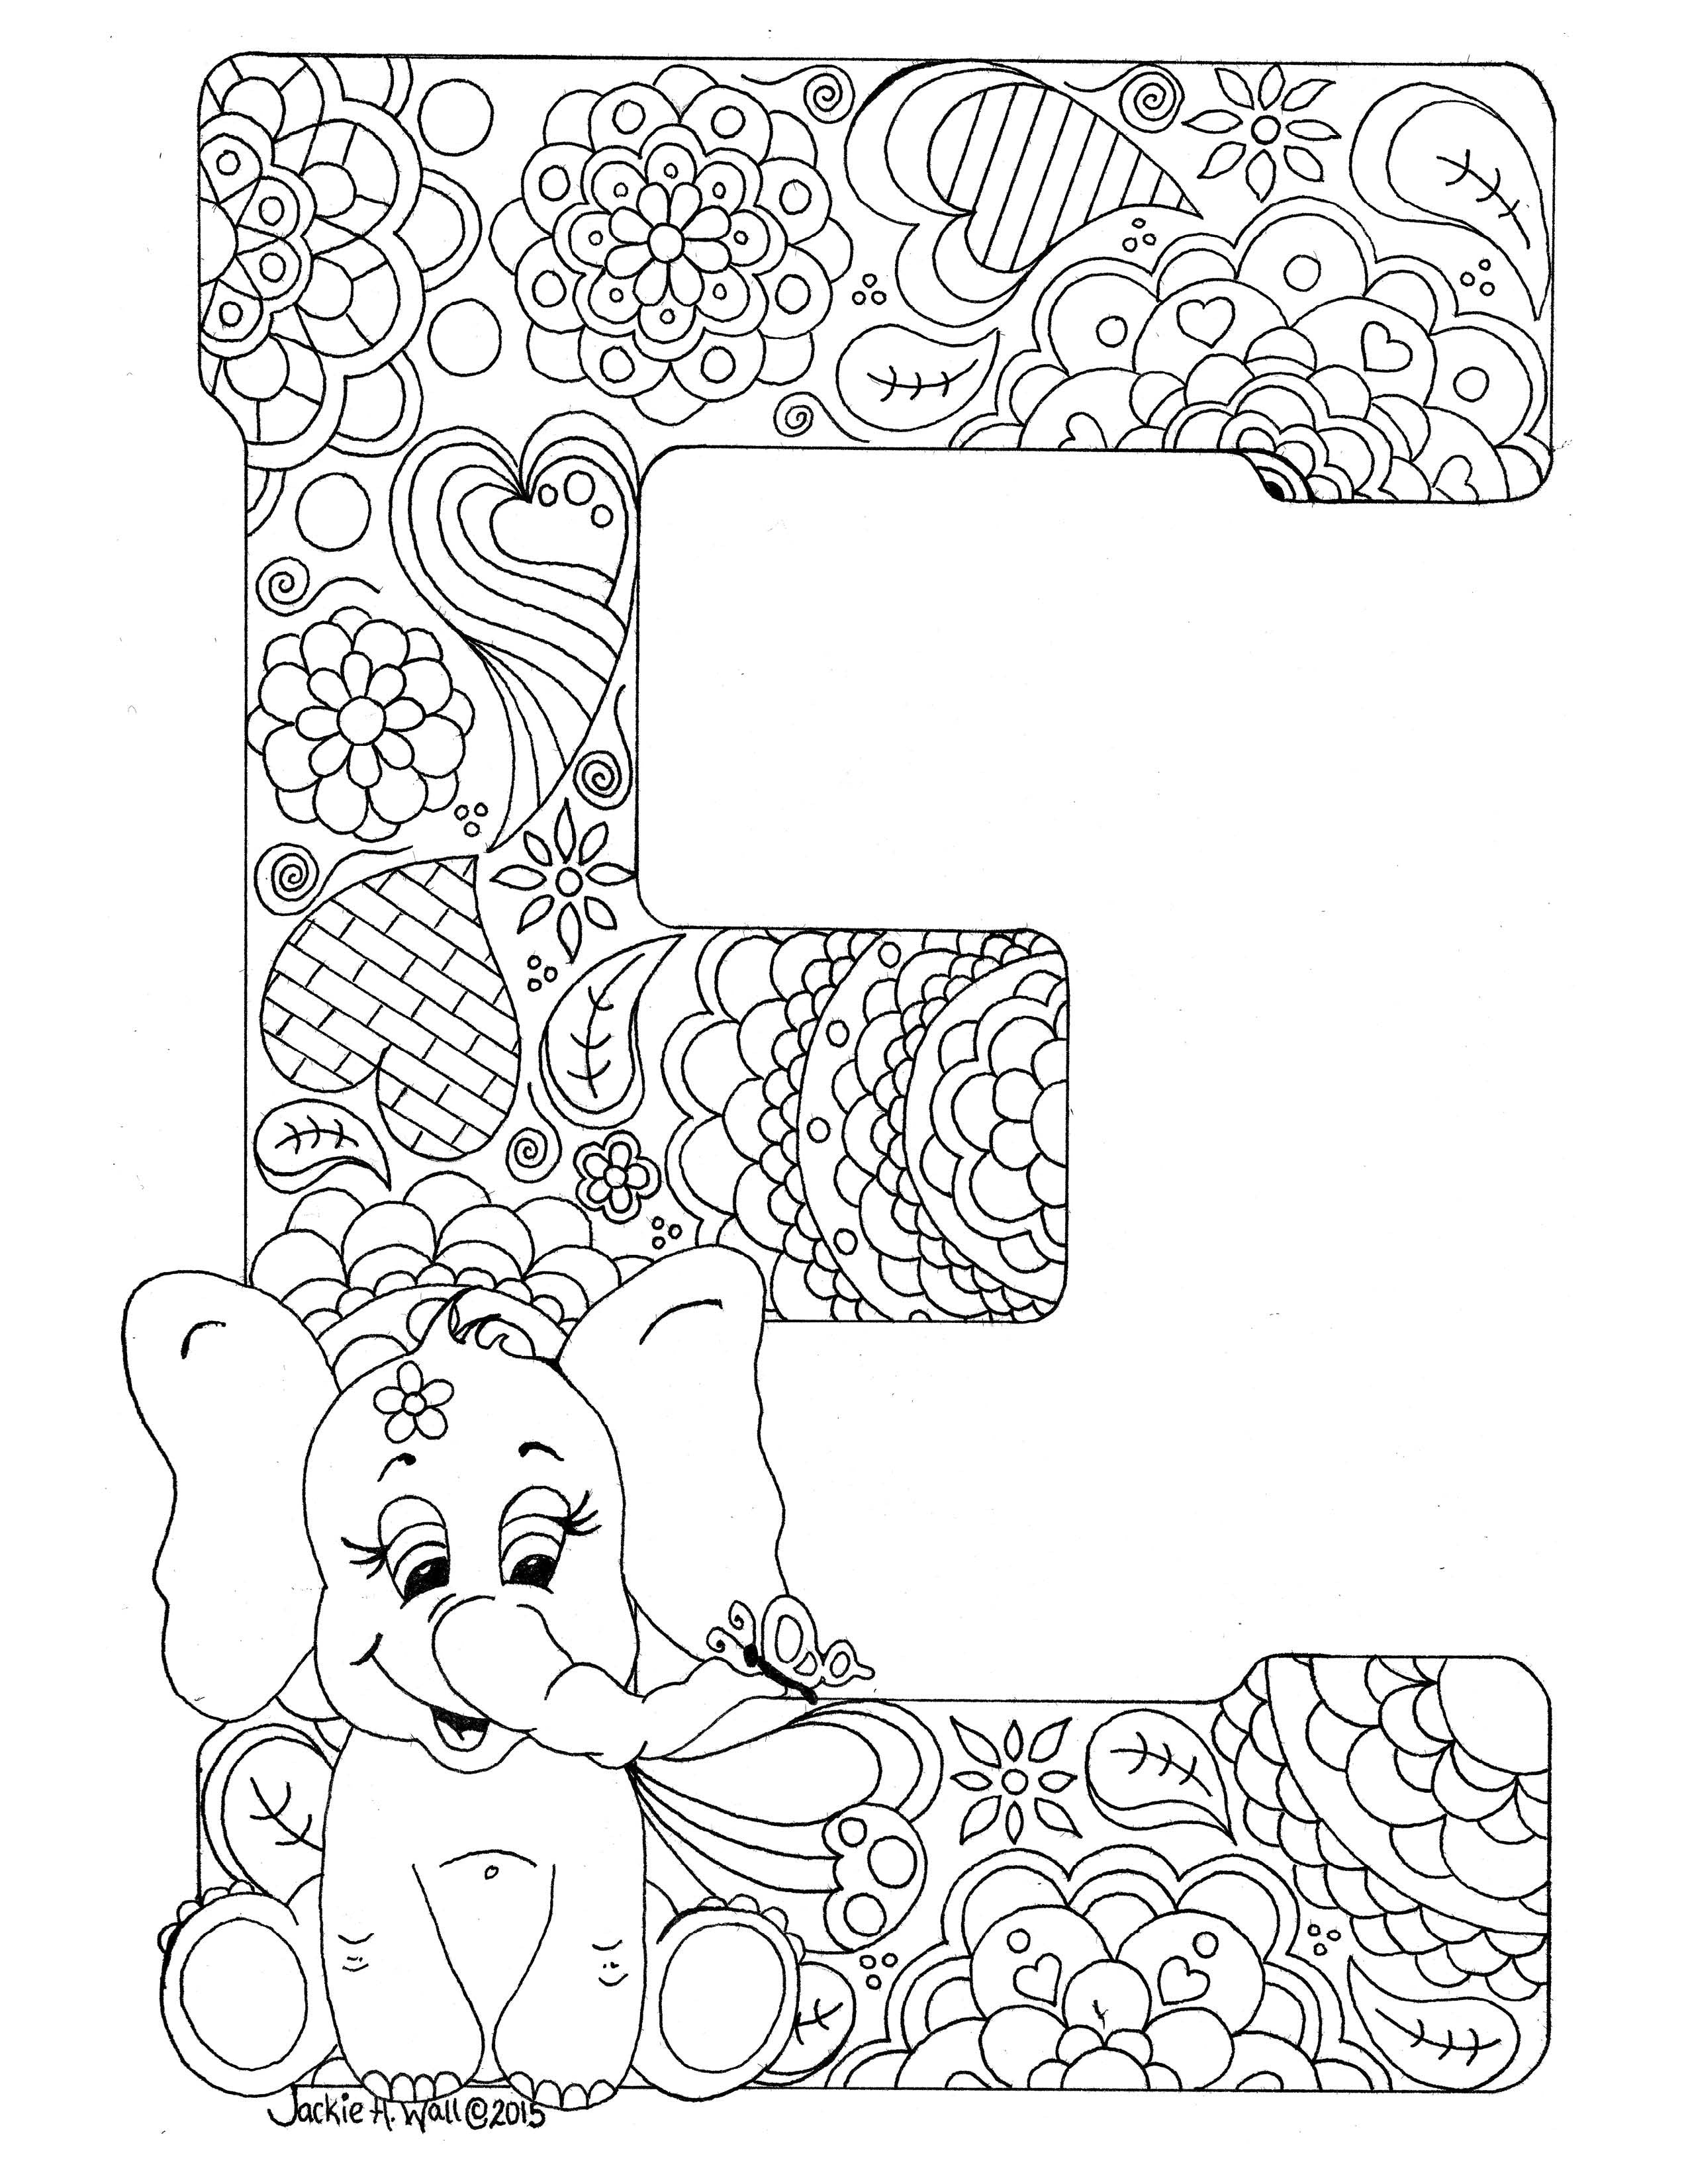 Copy of Letter E Colouring Page